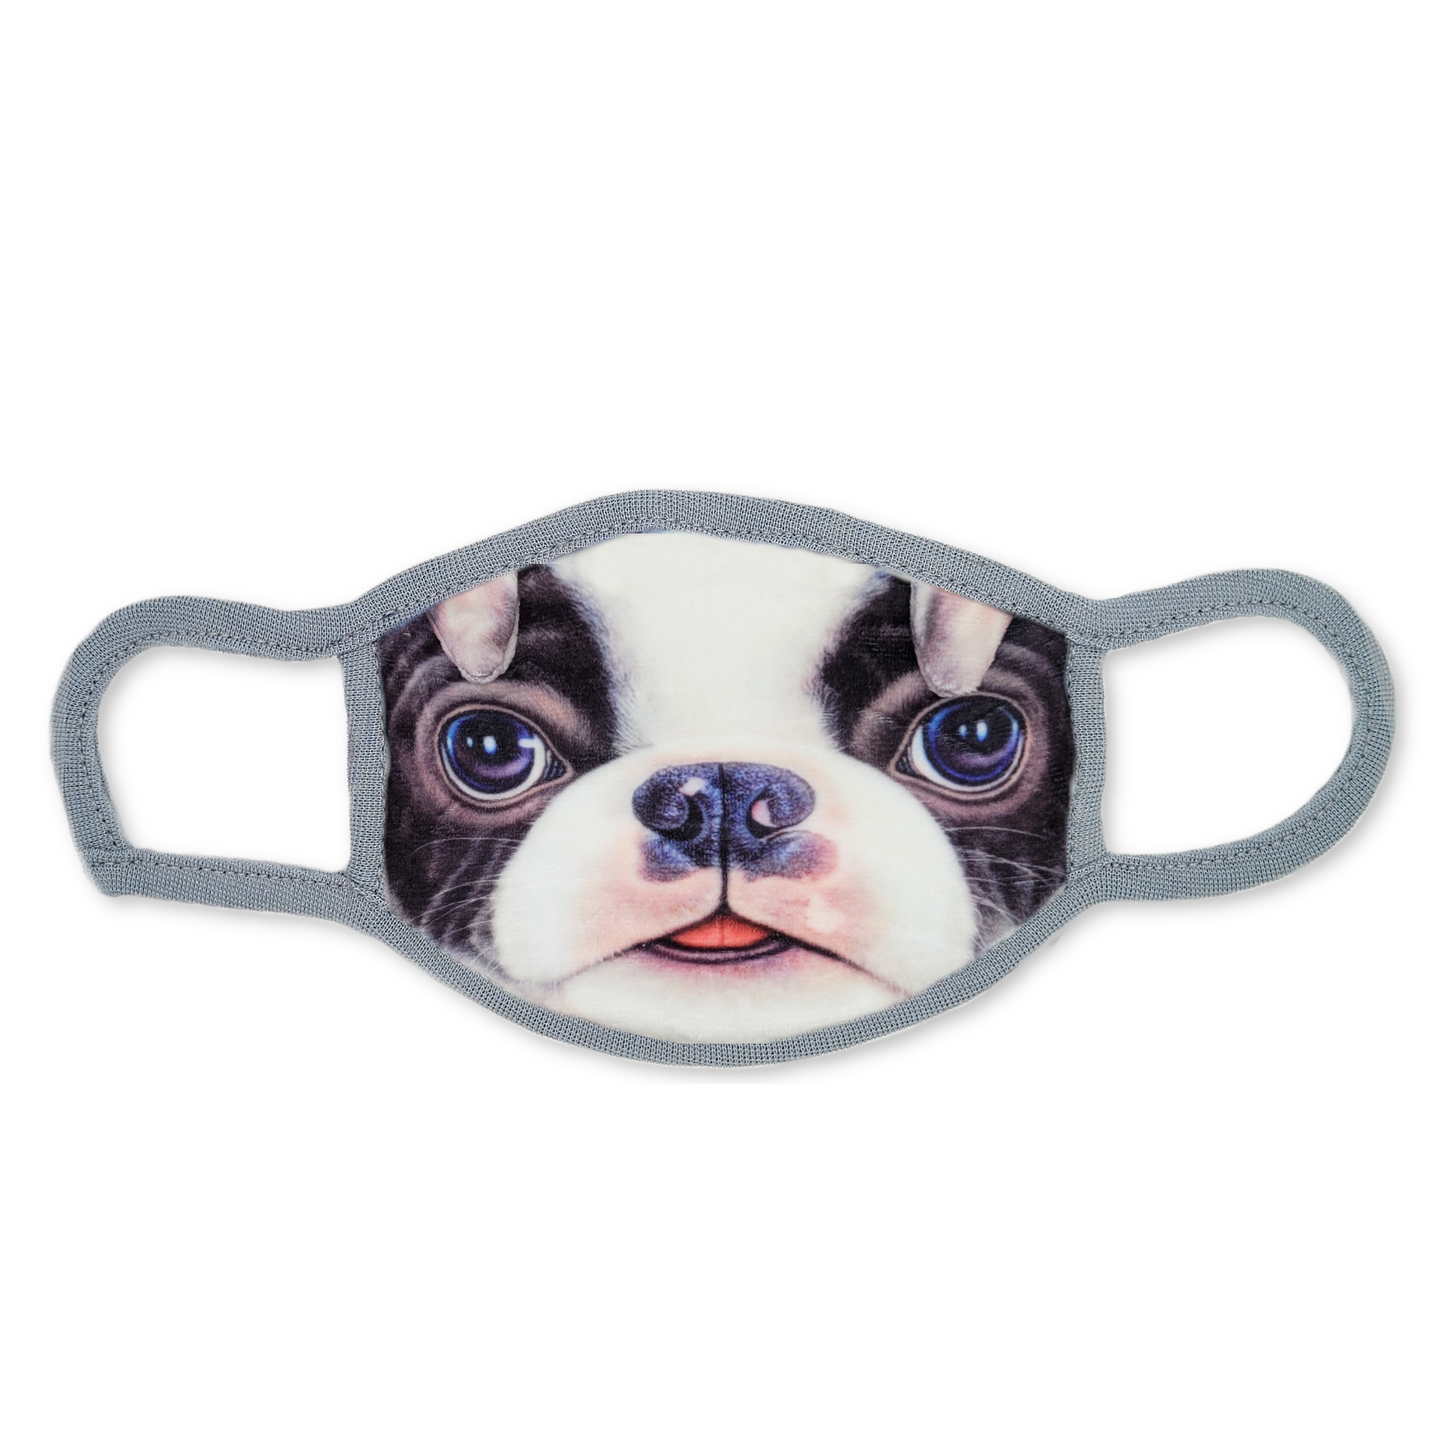 Bulldog, Chihuahua & Poodle Dog Mask Fabric Set of 3